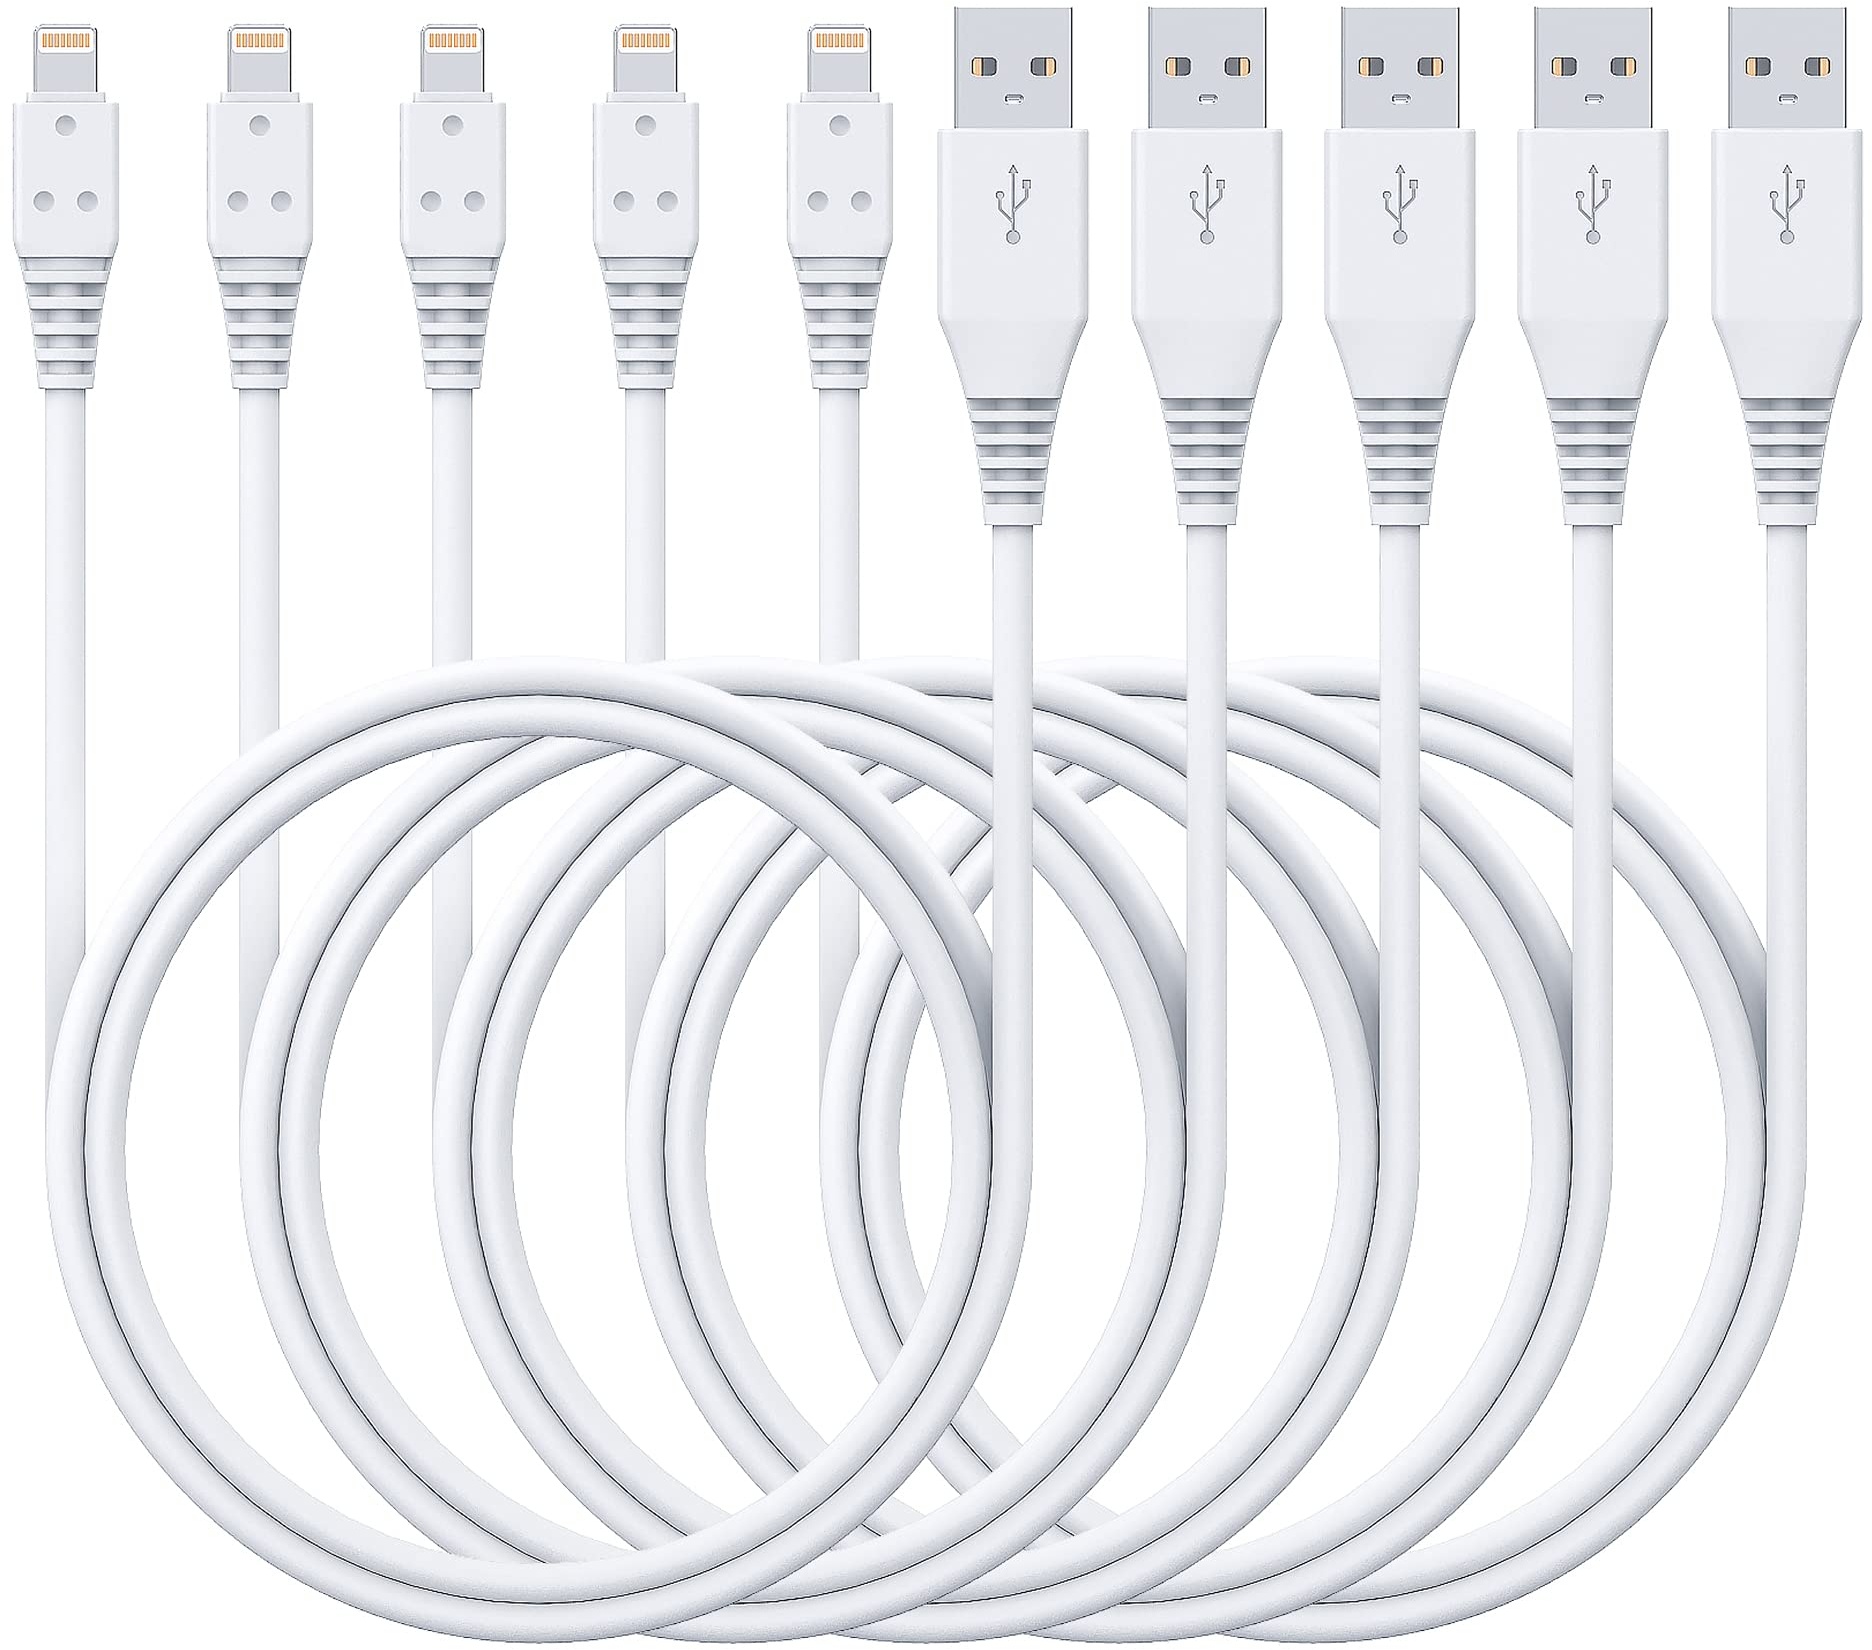 iPhone-Ladekabel, 1,8 m, 5er-Pack, Lightning-Kabel, 1,8 m, Ailawuu iPhone-Kabel, Synchronisierung, USB, Schnellladung, kompatibel mit iPhone 11/11 Pro/Pro Max/X/XS Max/XR/8/8 Plus/7/7 Plus/iPad/iPod